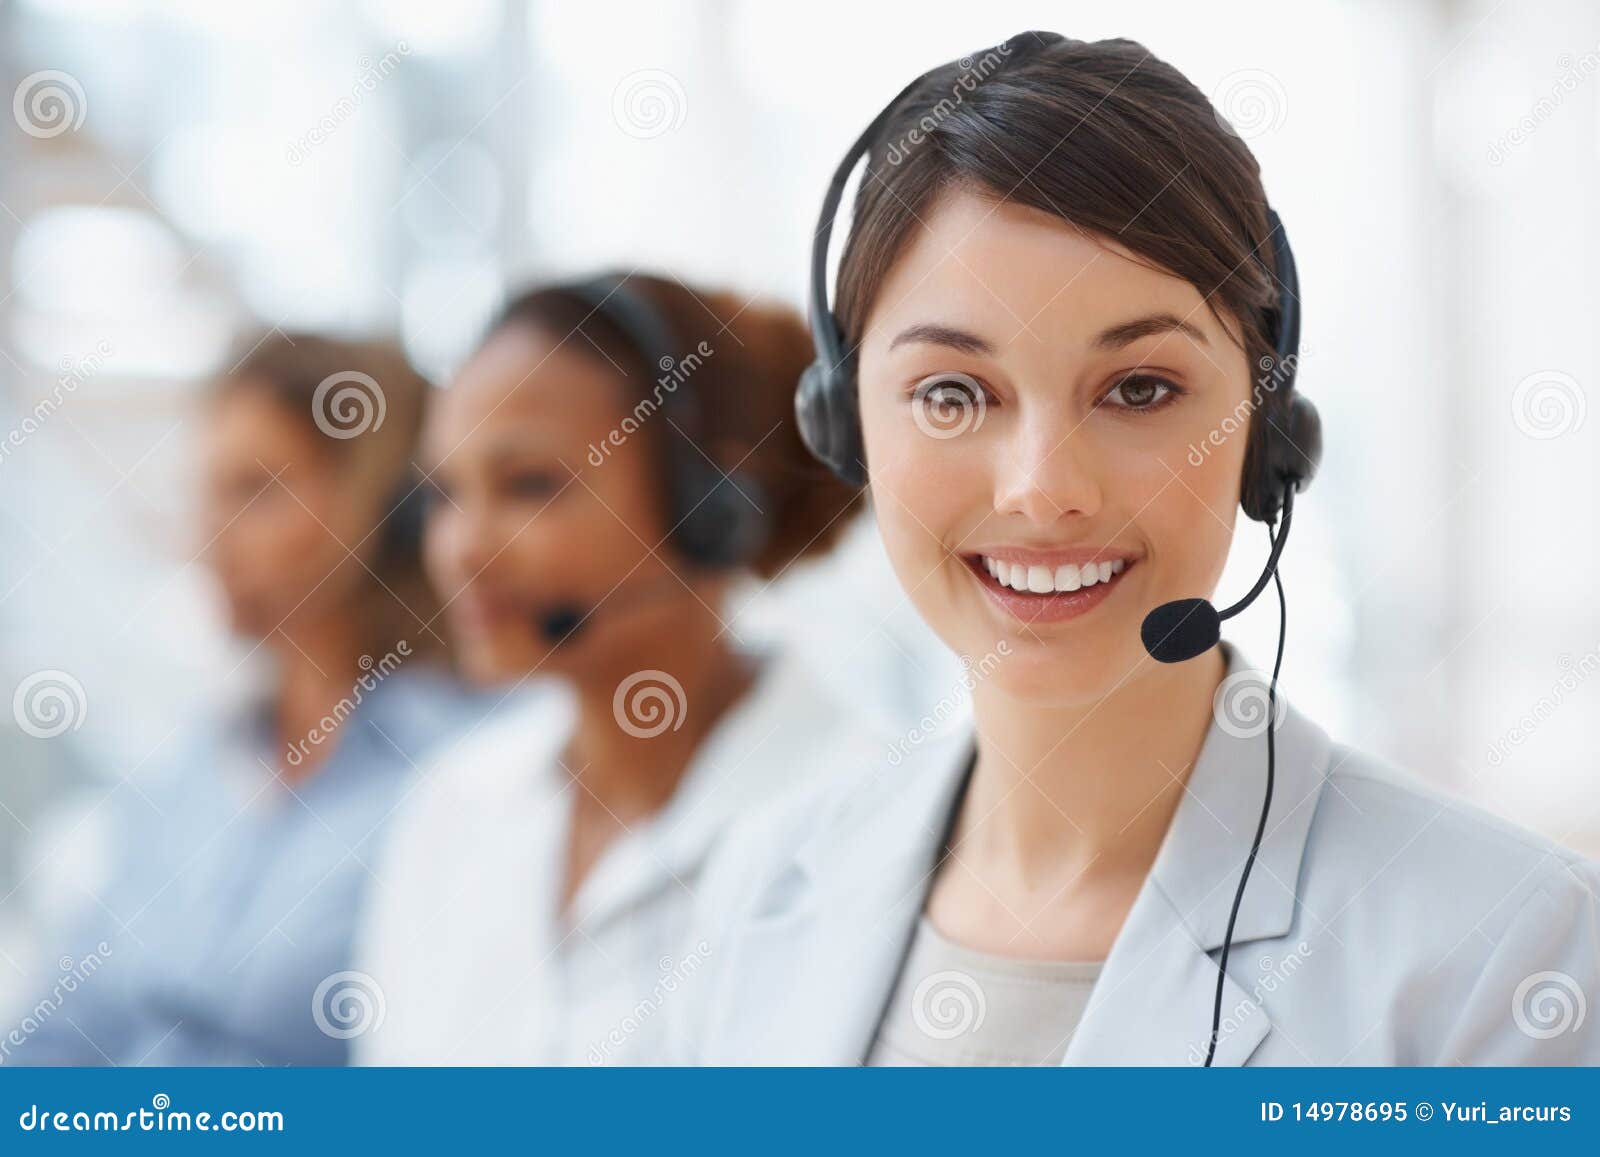 call center employee headset workplace 14978695